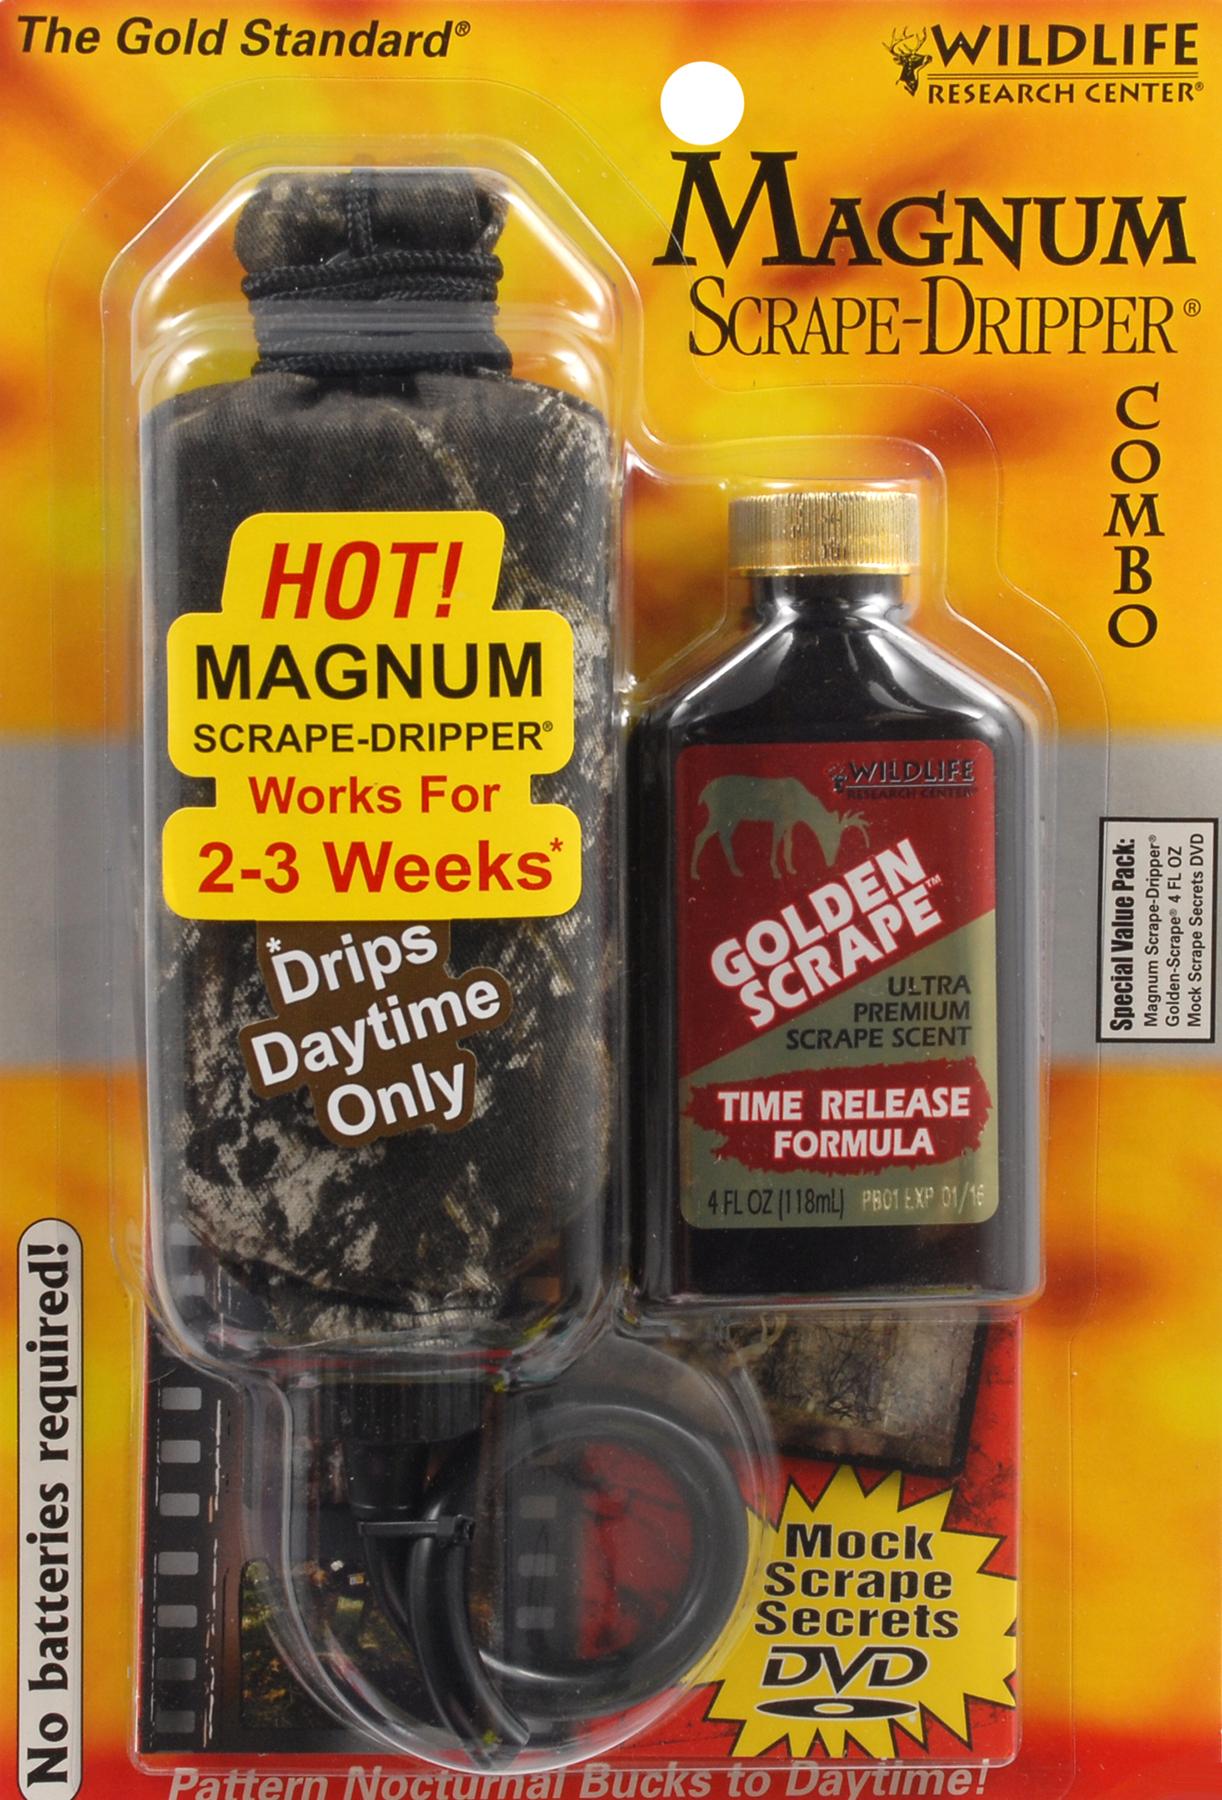 Wildlife Research Center Magnum Scrape Dripper Scent Dispenser and 4 oz Golden Scrape Scent Bottle